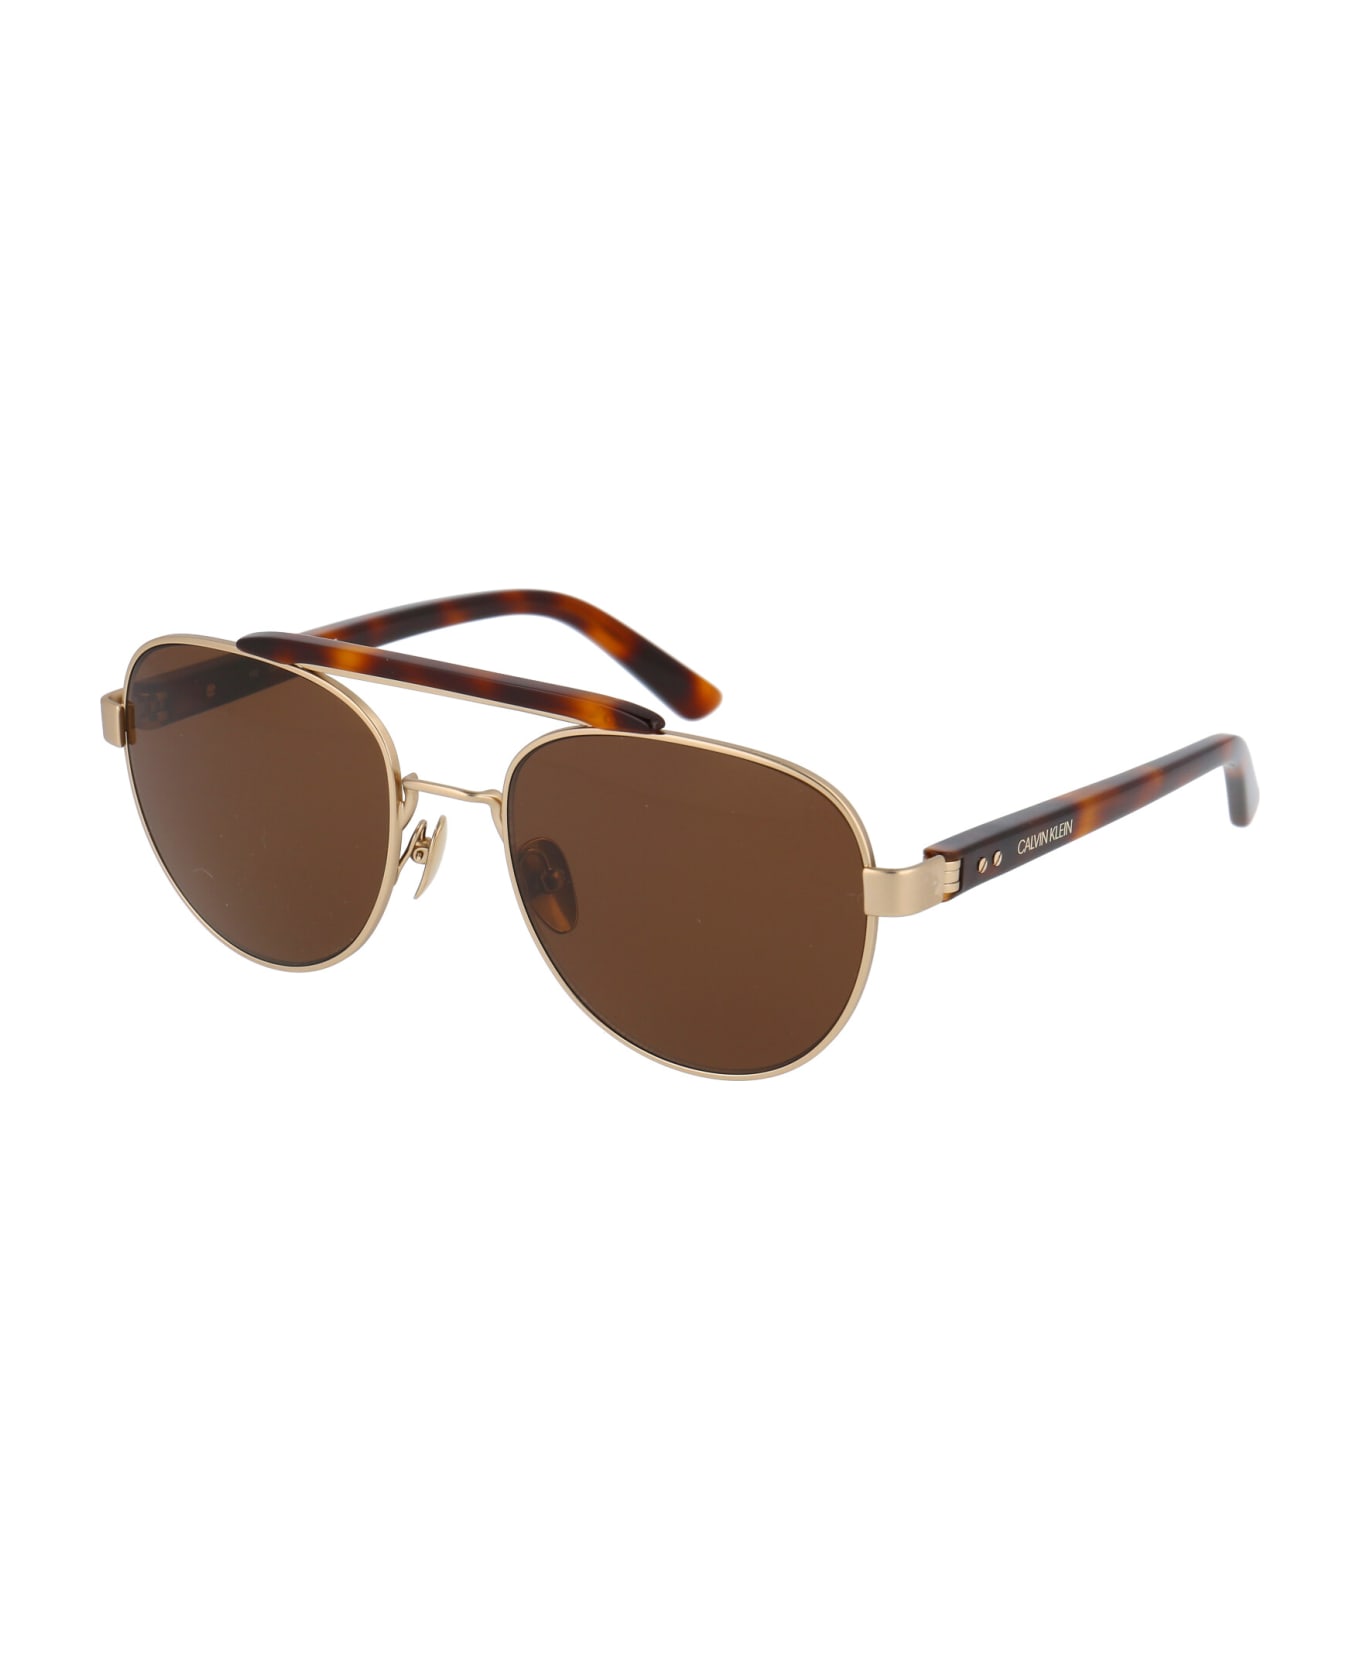 Calvin Klein Ck19306s Sunglasses - 240 SOFT TORTOISE